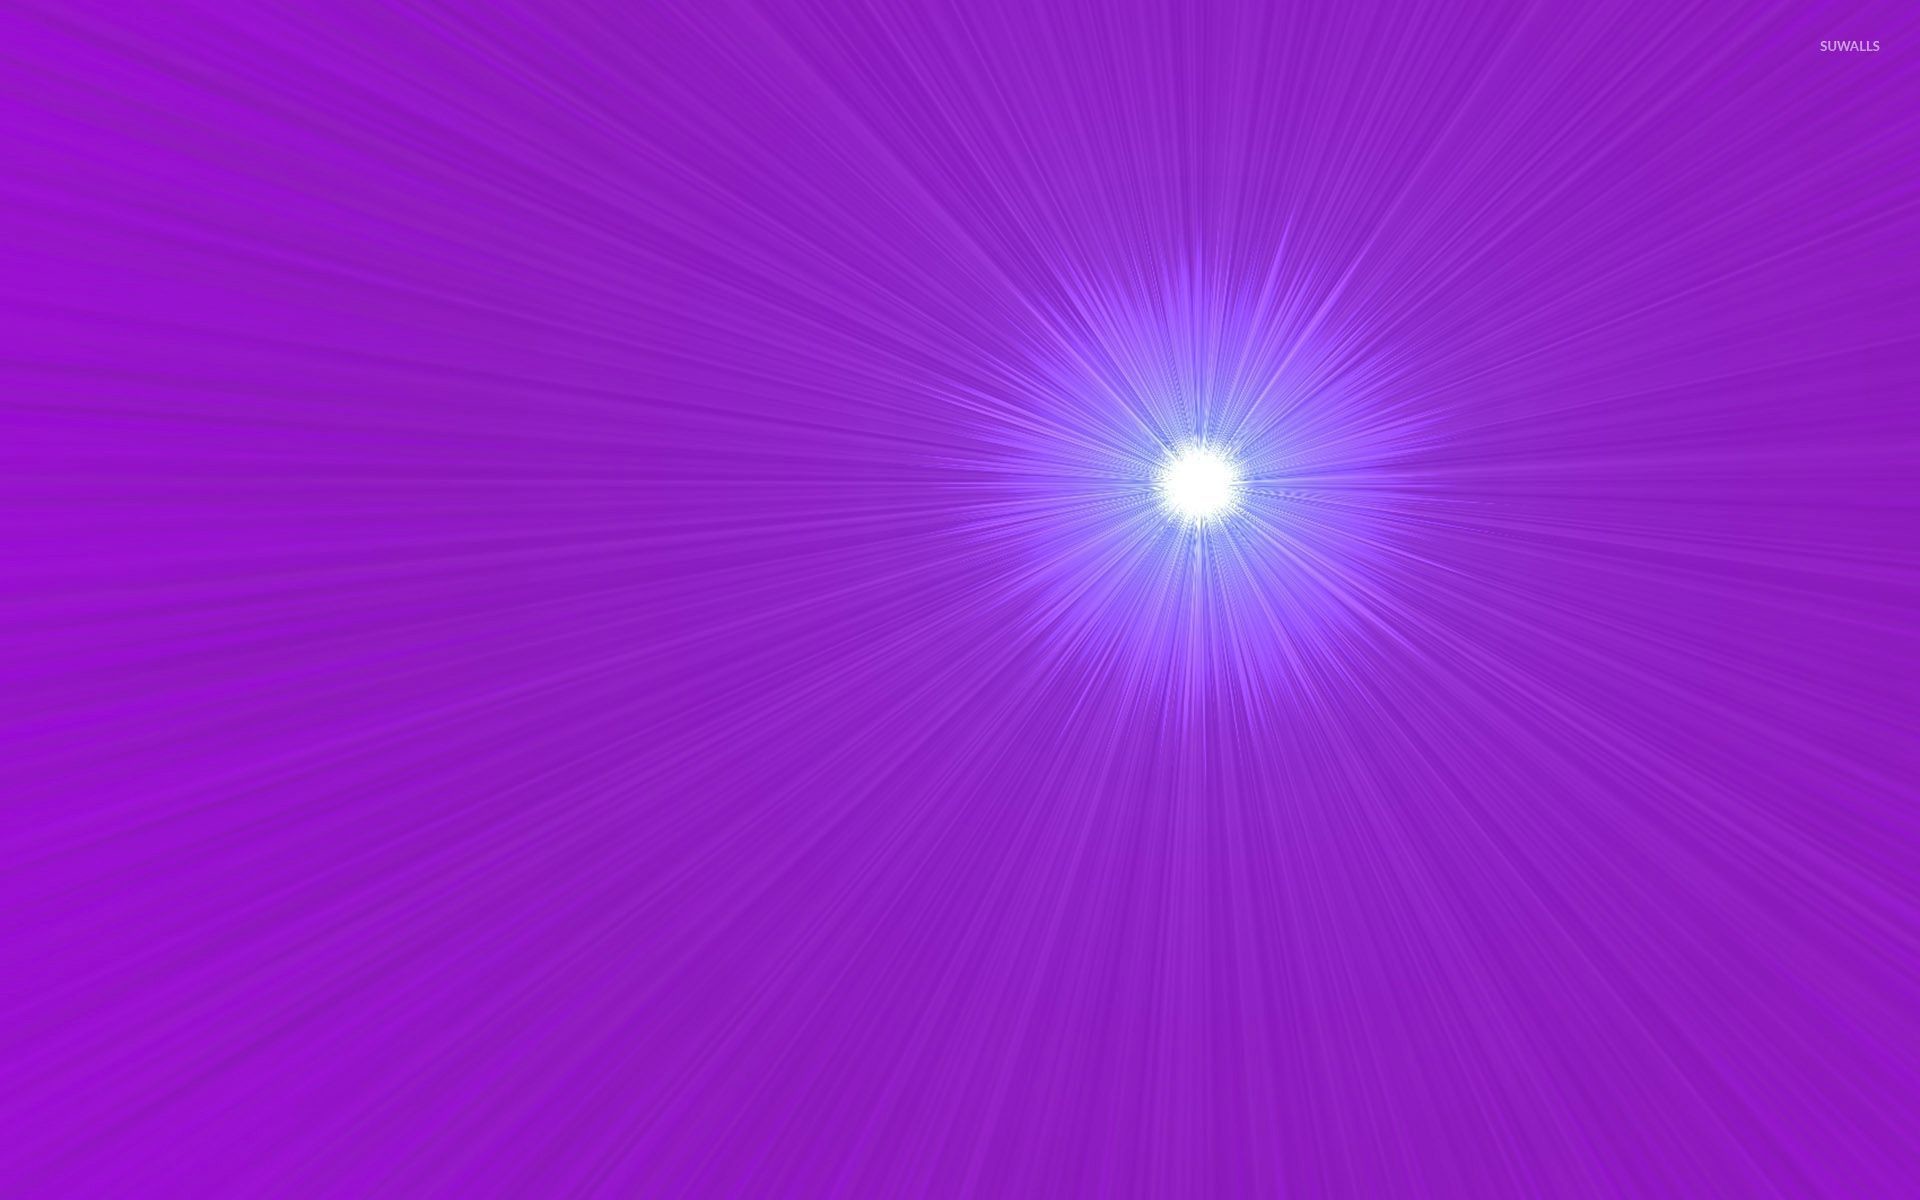 1920x1200 Bright light on the purple wall wallpaper